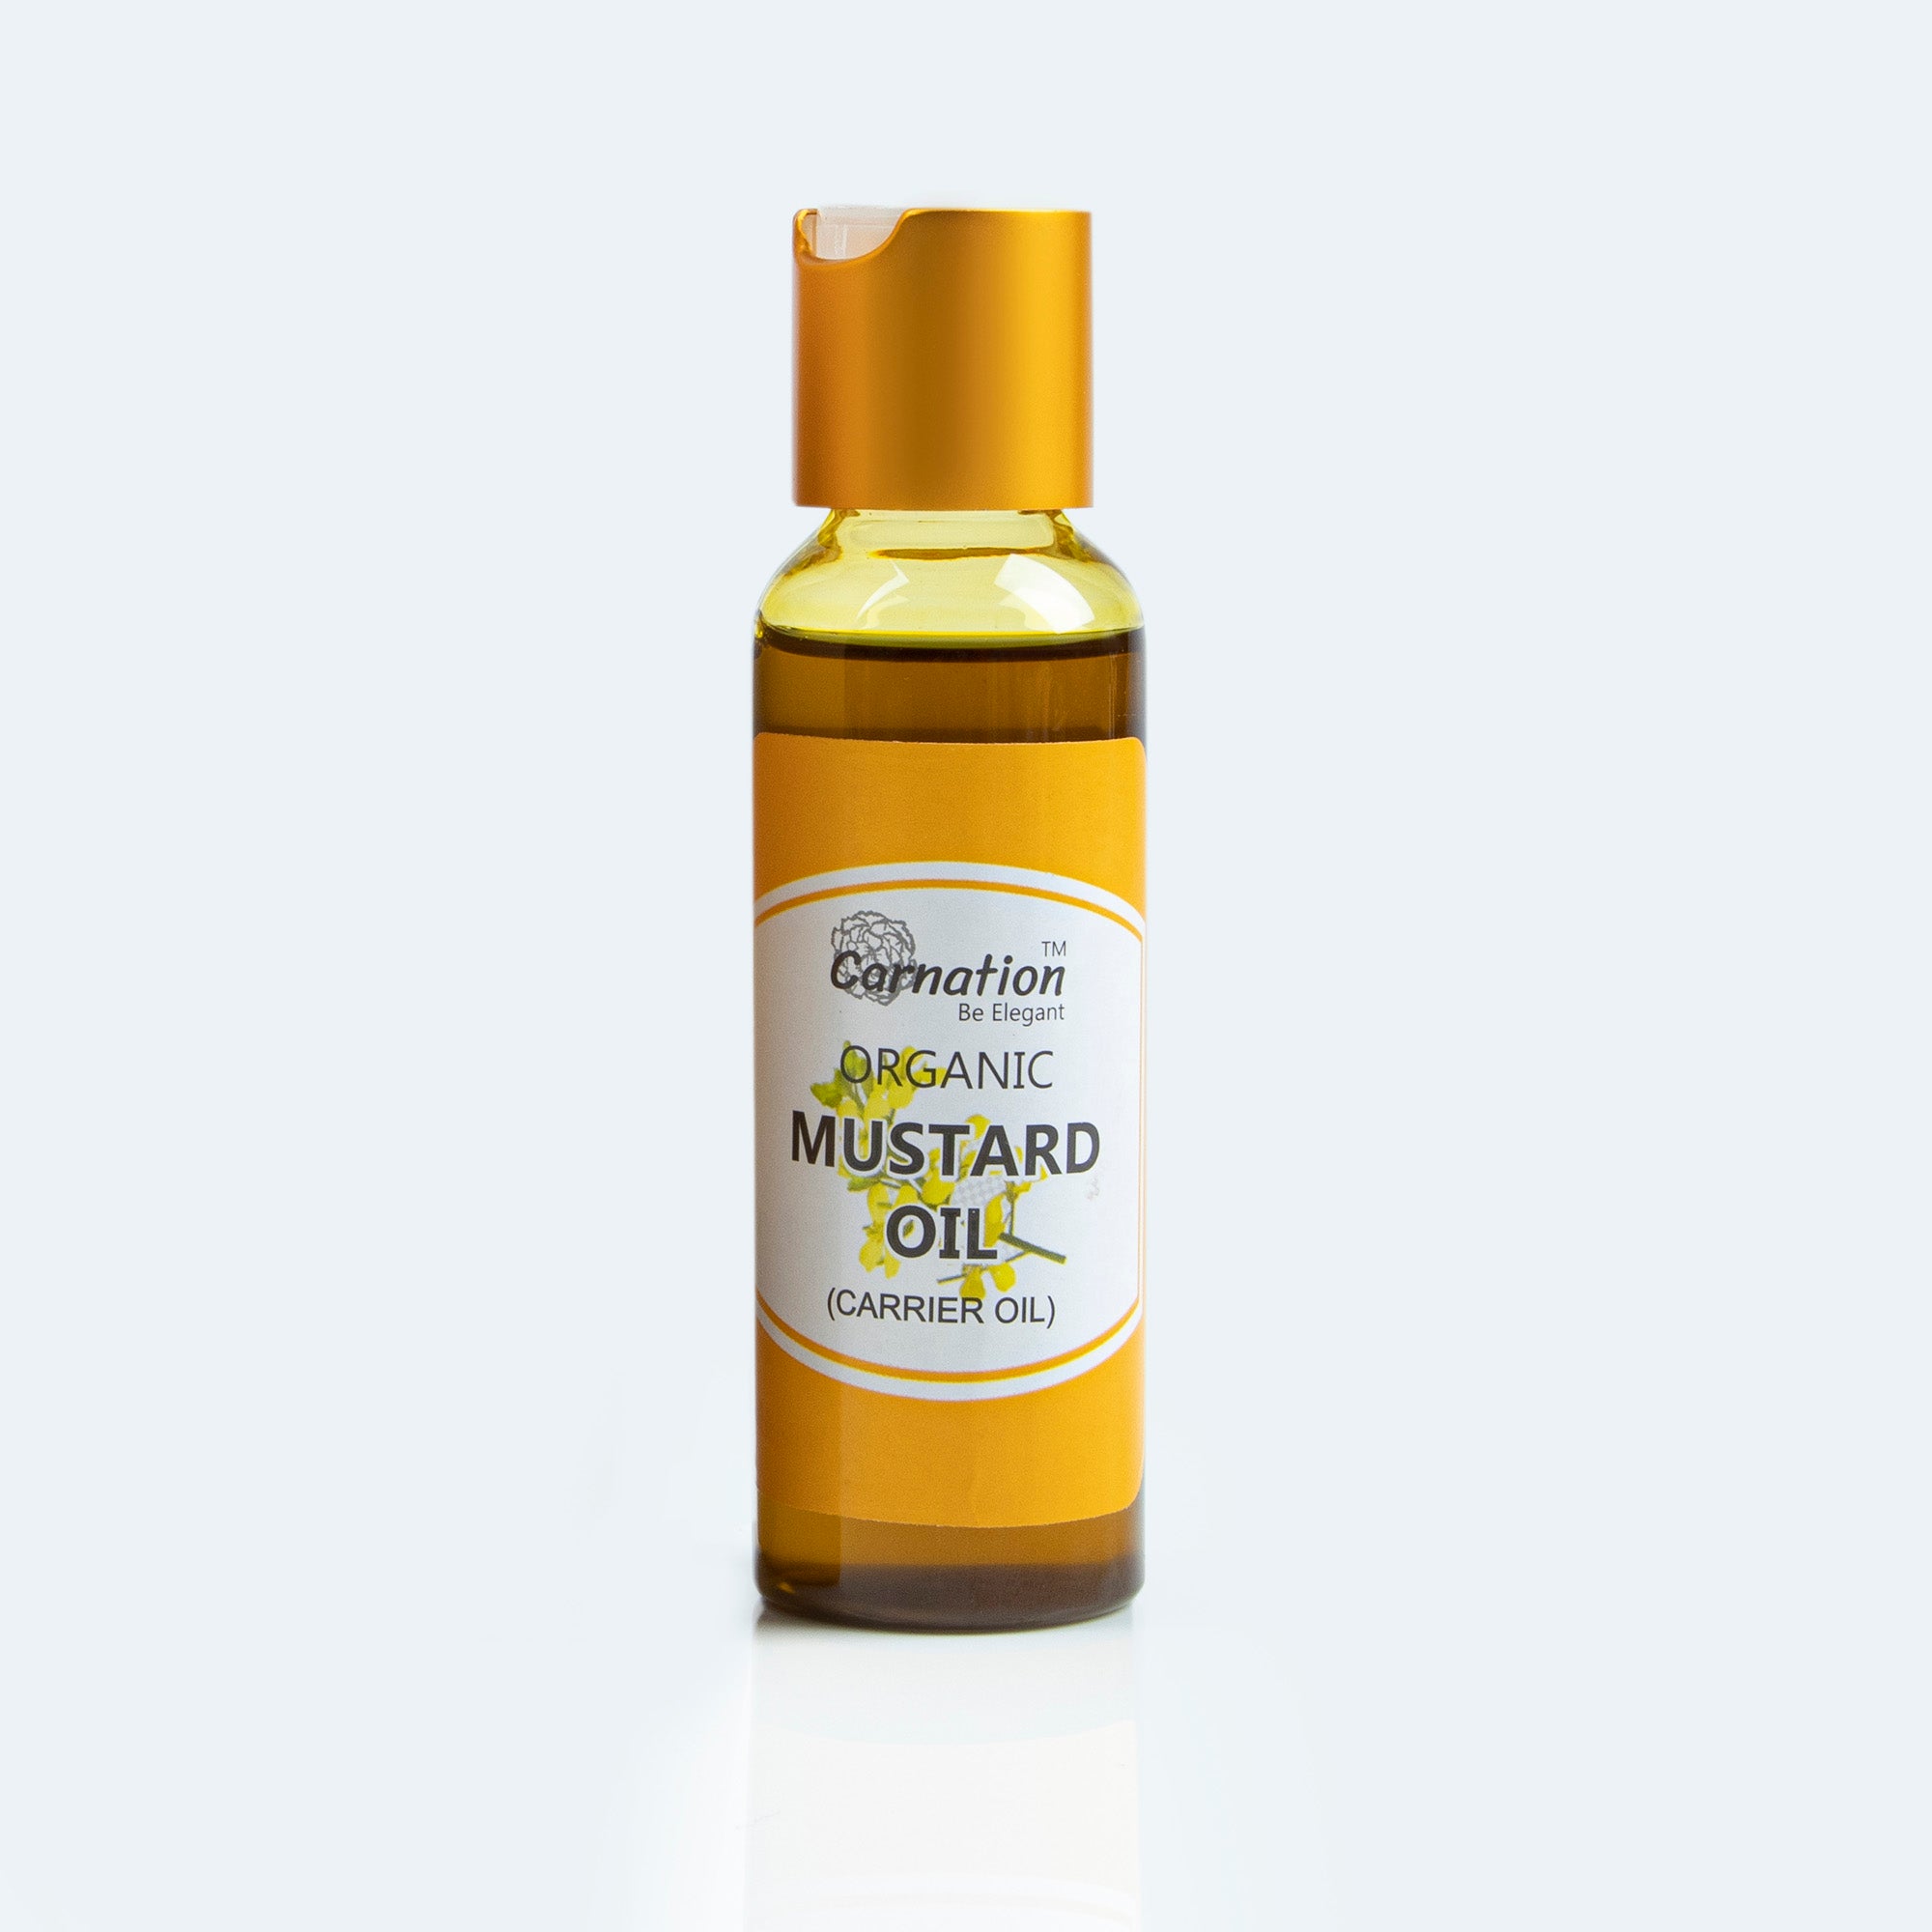 Mustard oil benefits